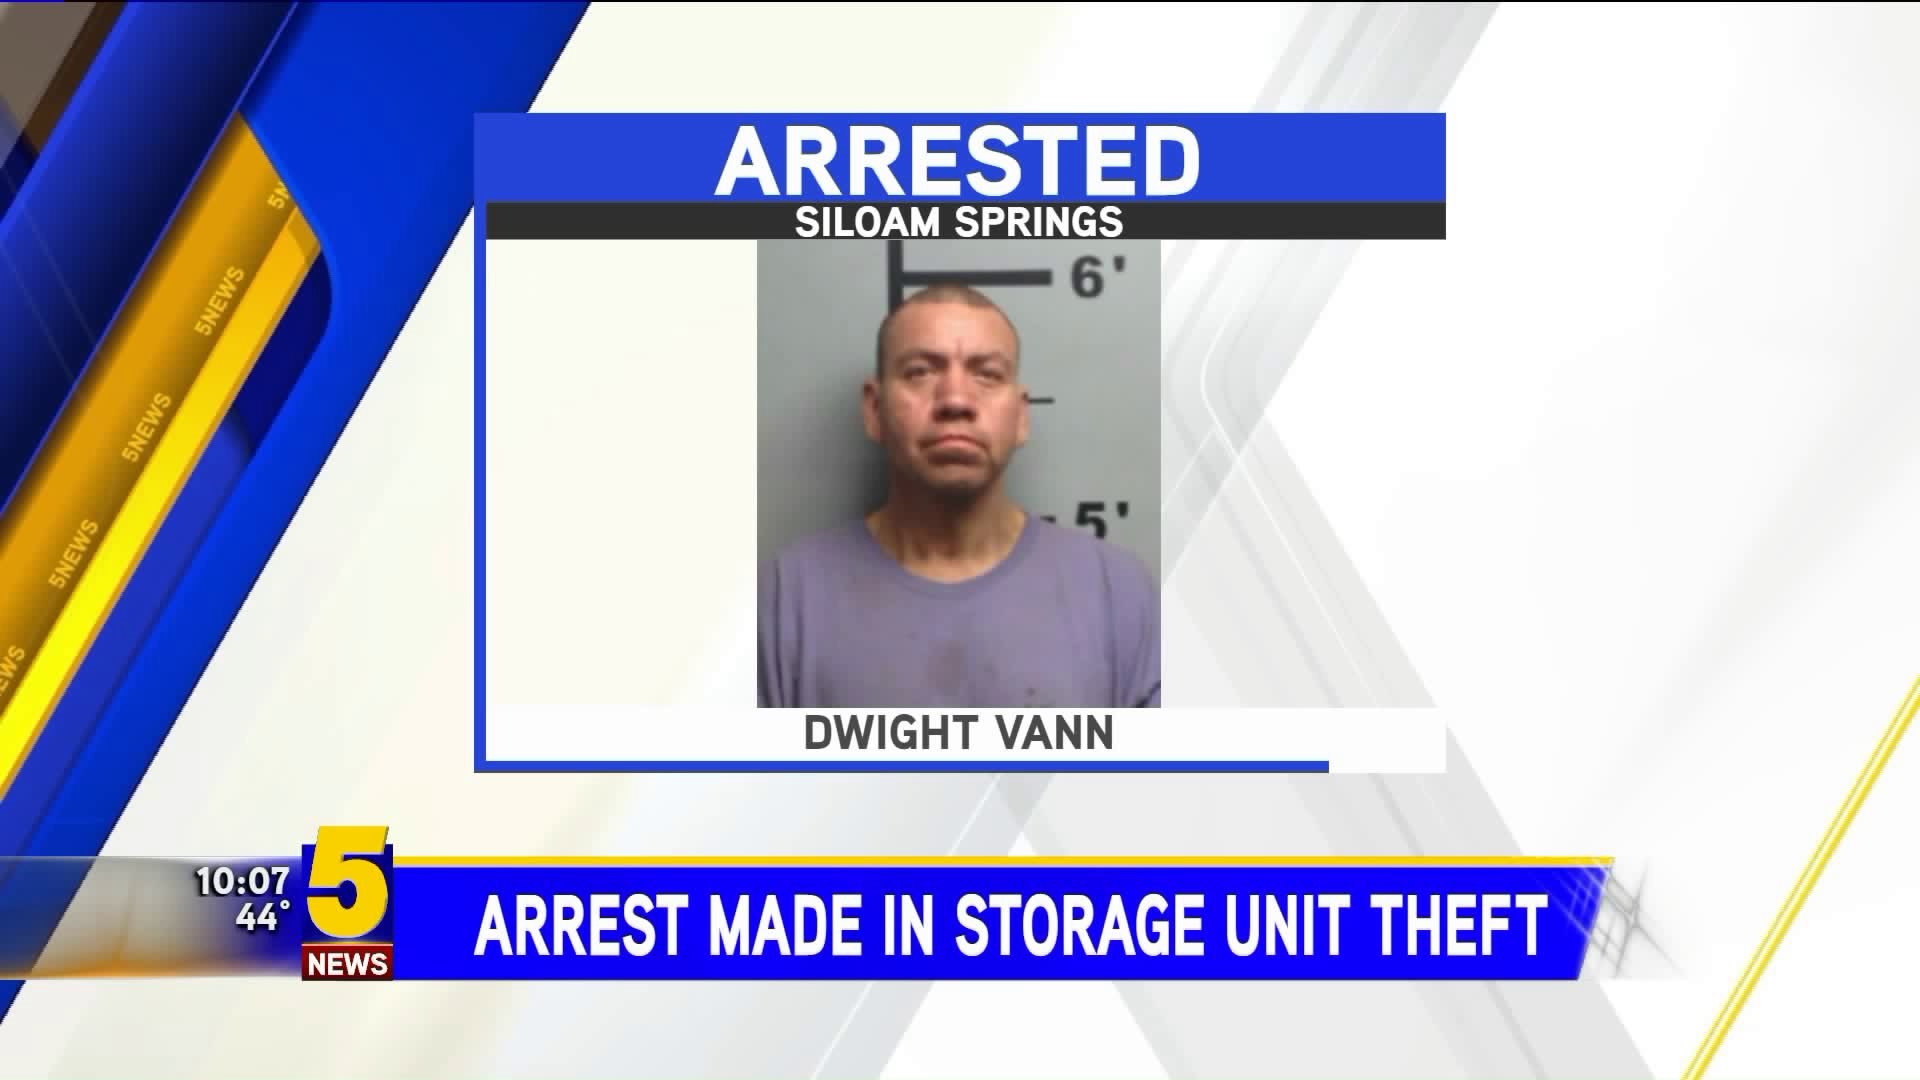 arrest made in storage unit theft in siloam springs Dwight Vann